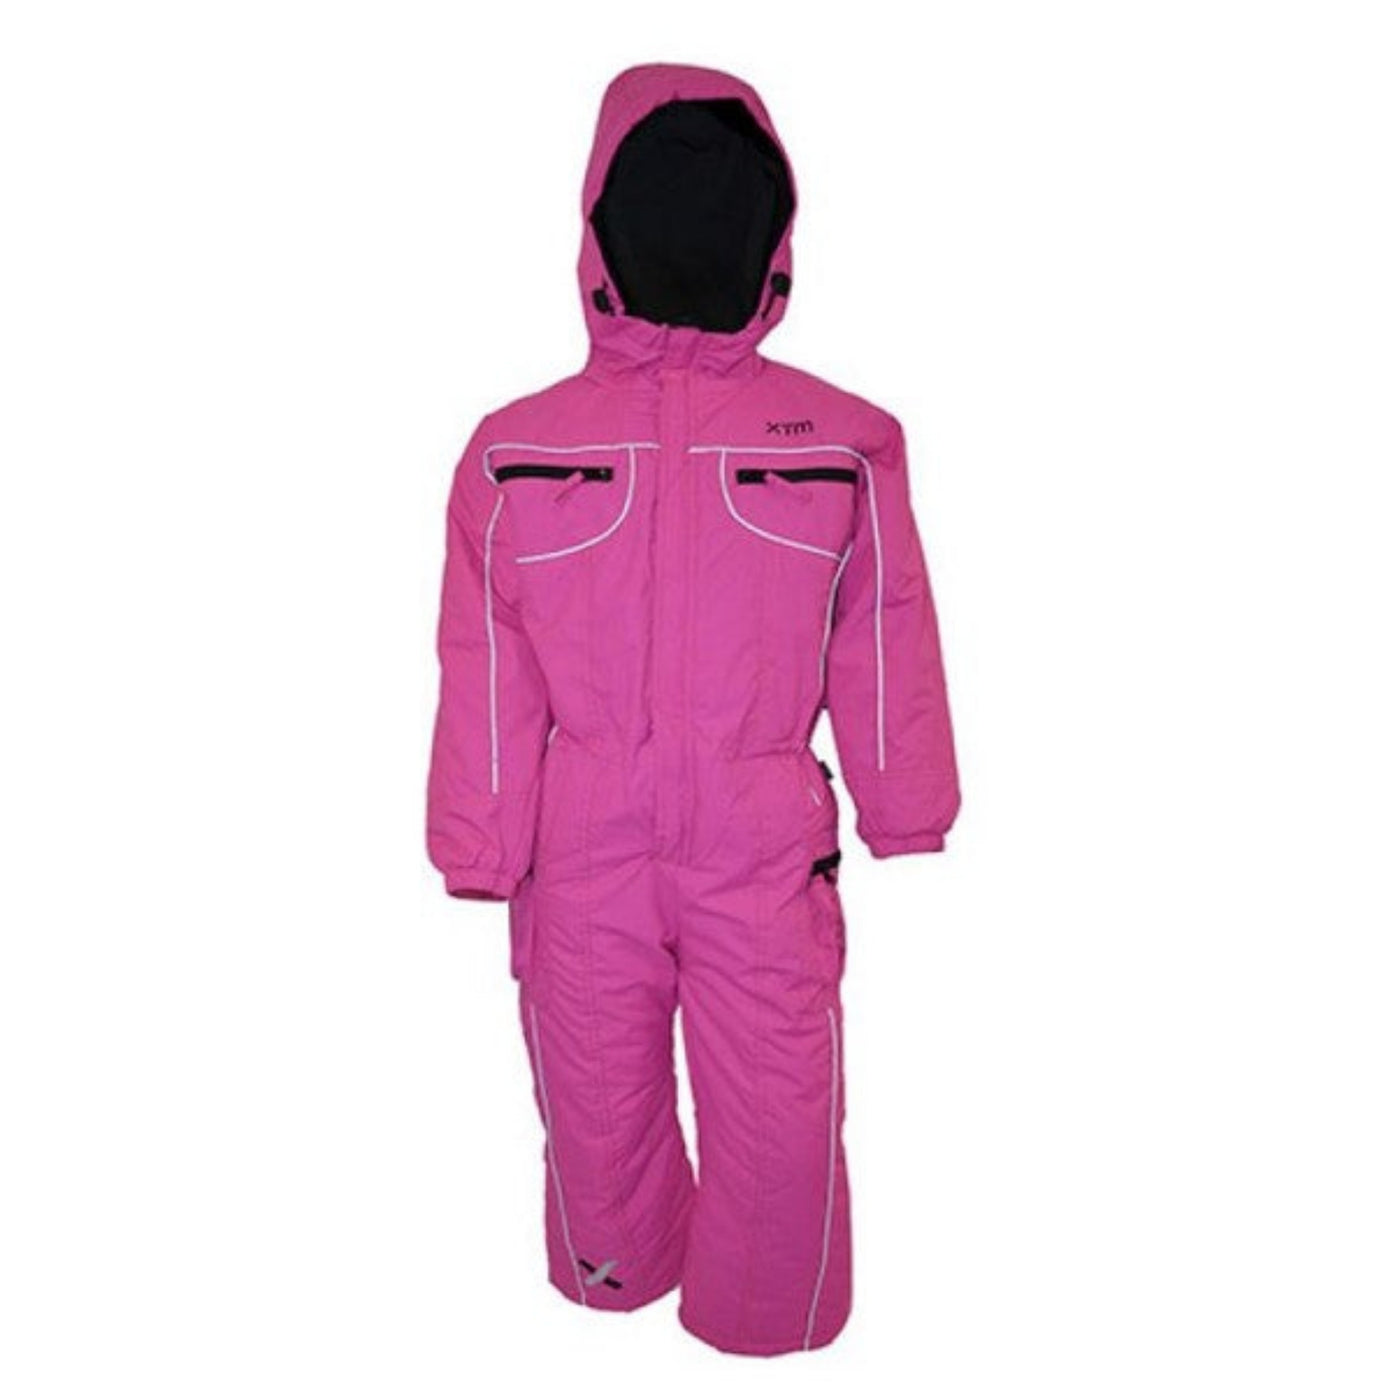 XTM Frosty Kids Snow Suit - Pink